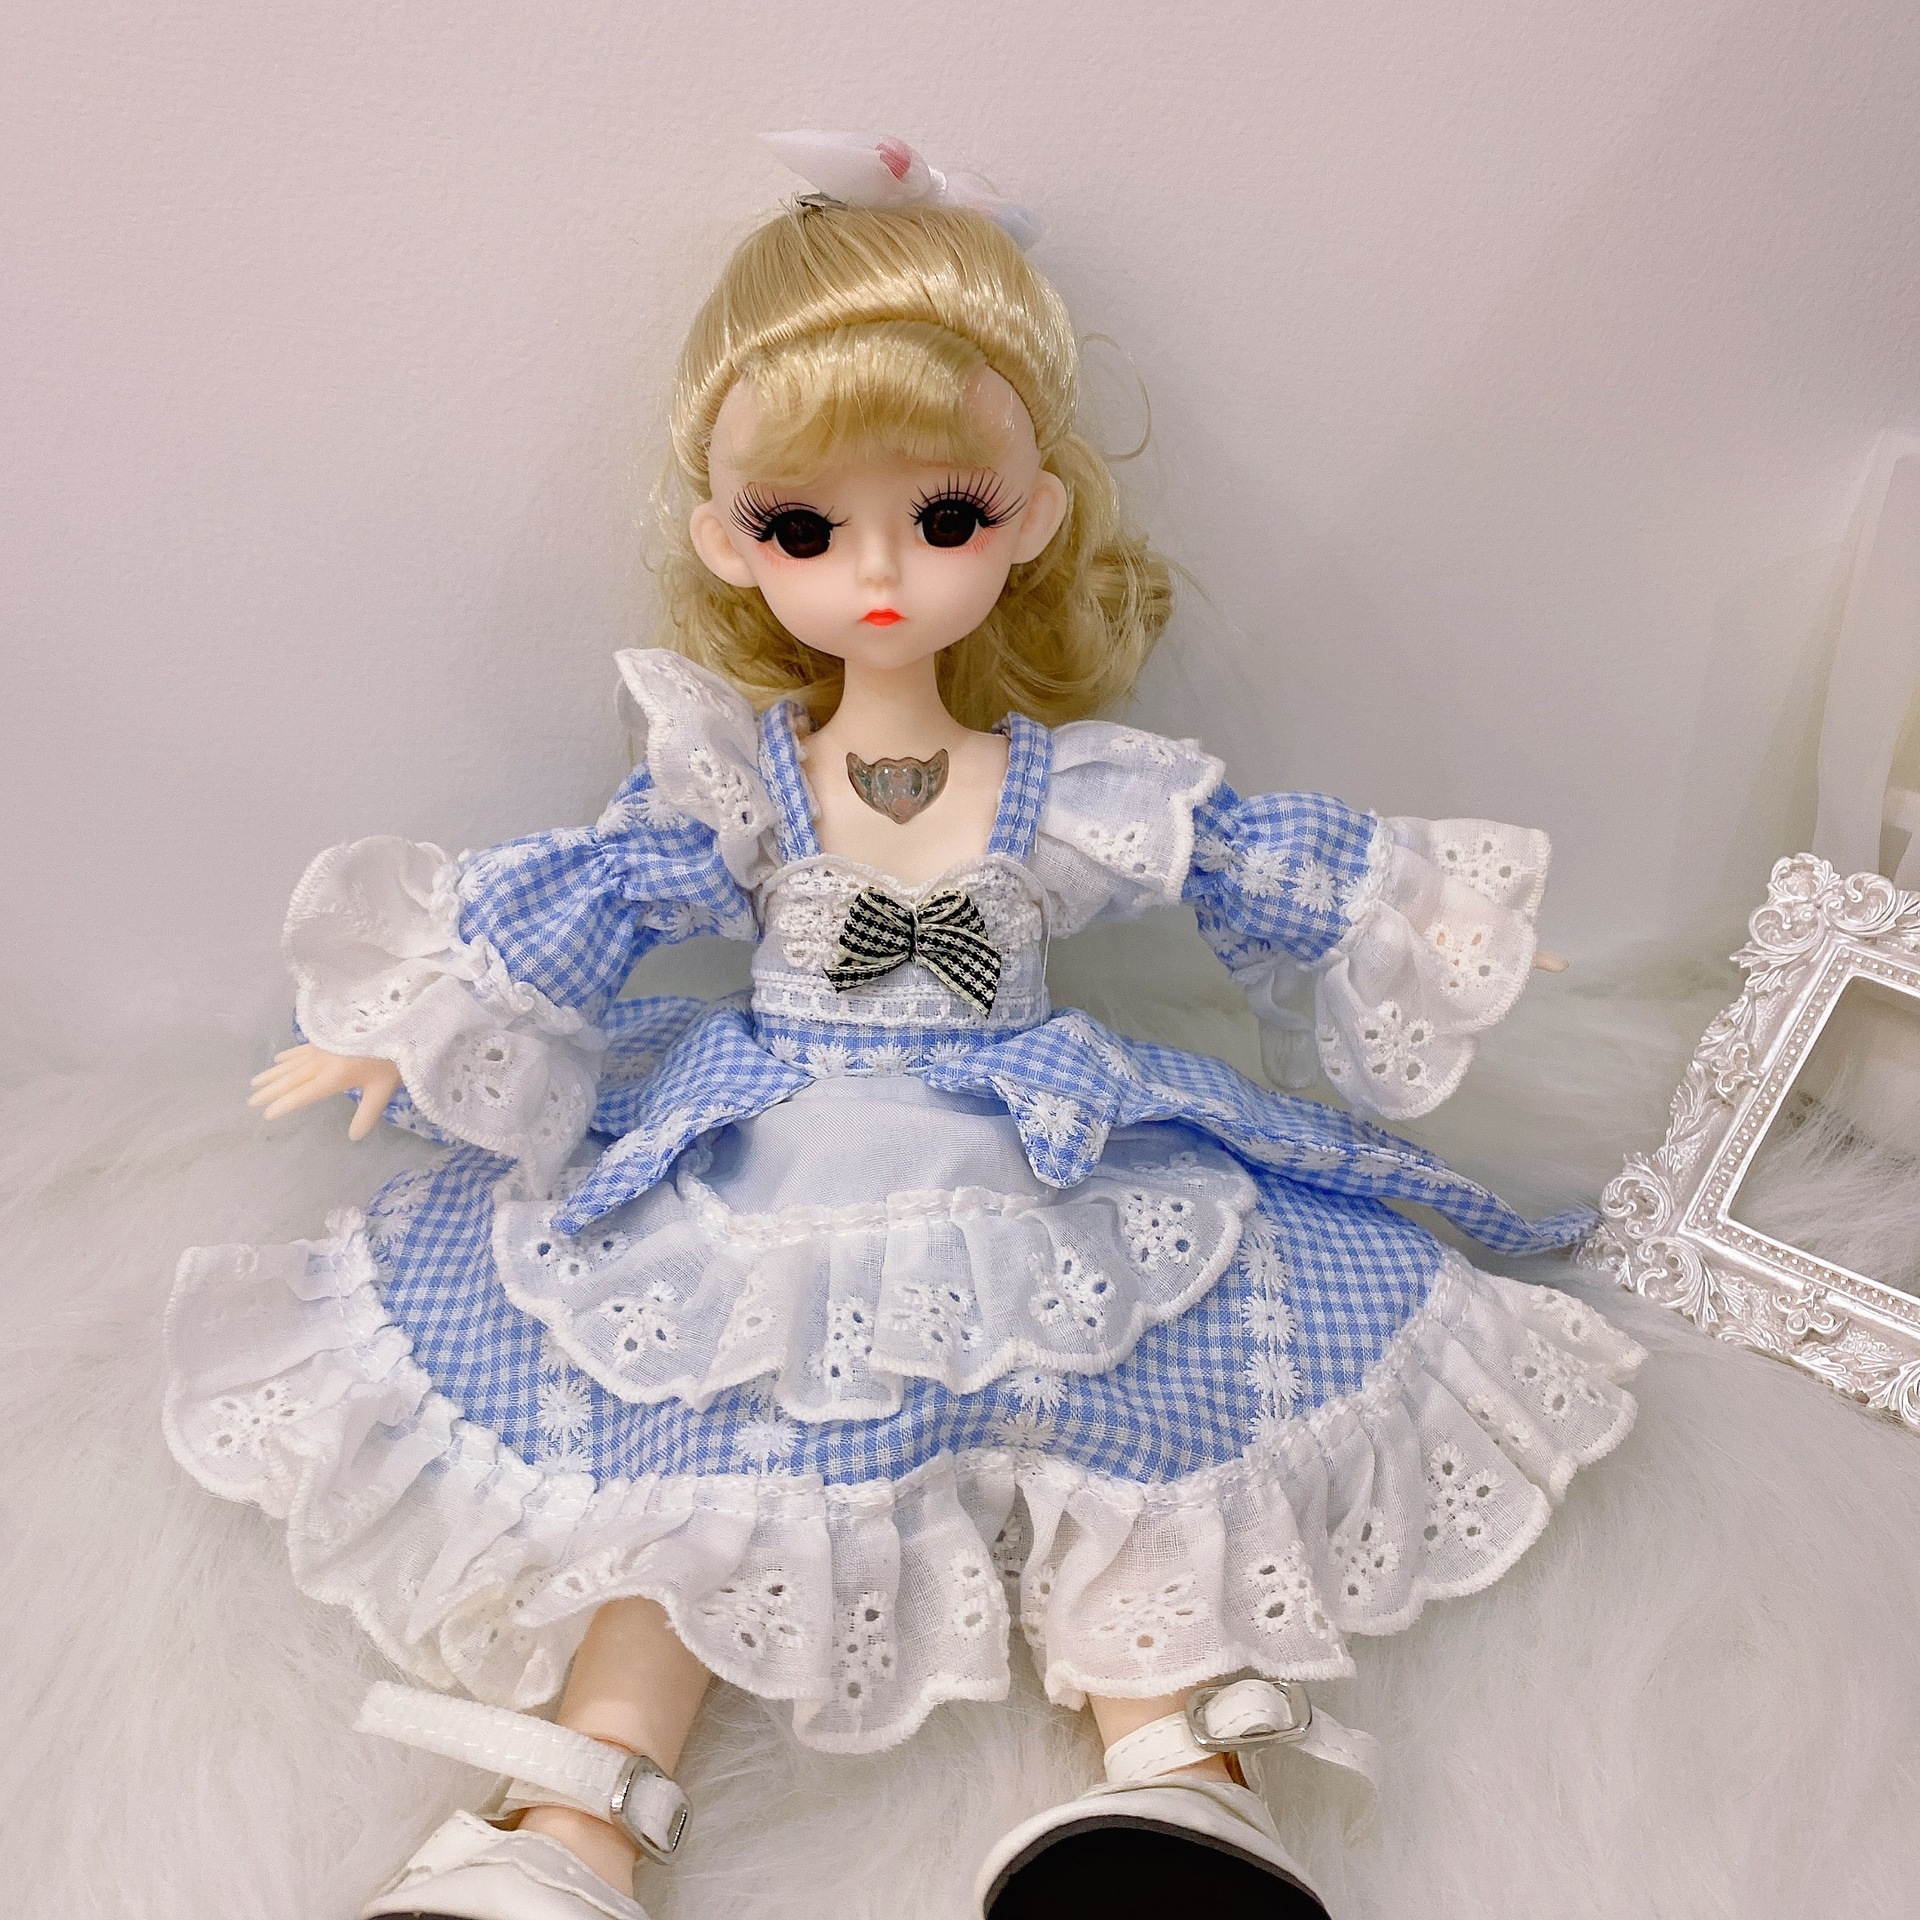 Anime Plushies Adorable Young Princess Lolita Doll - Perfect Gift for Kids